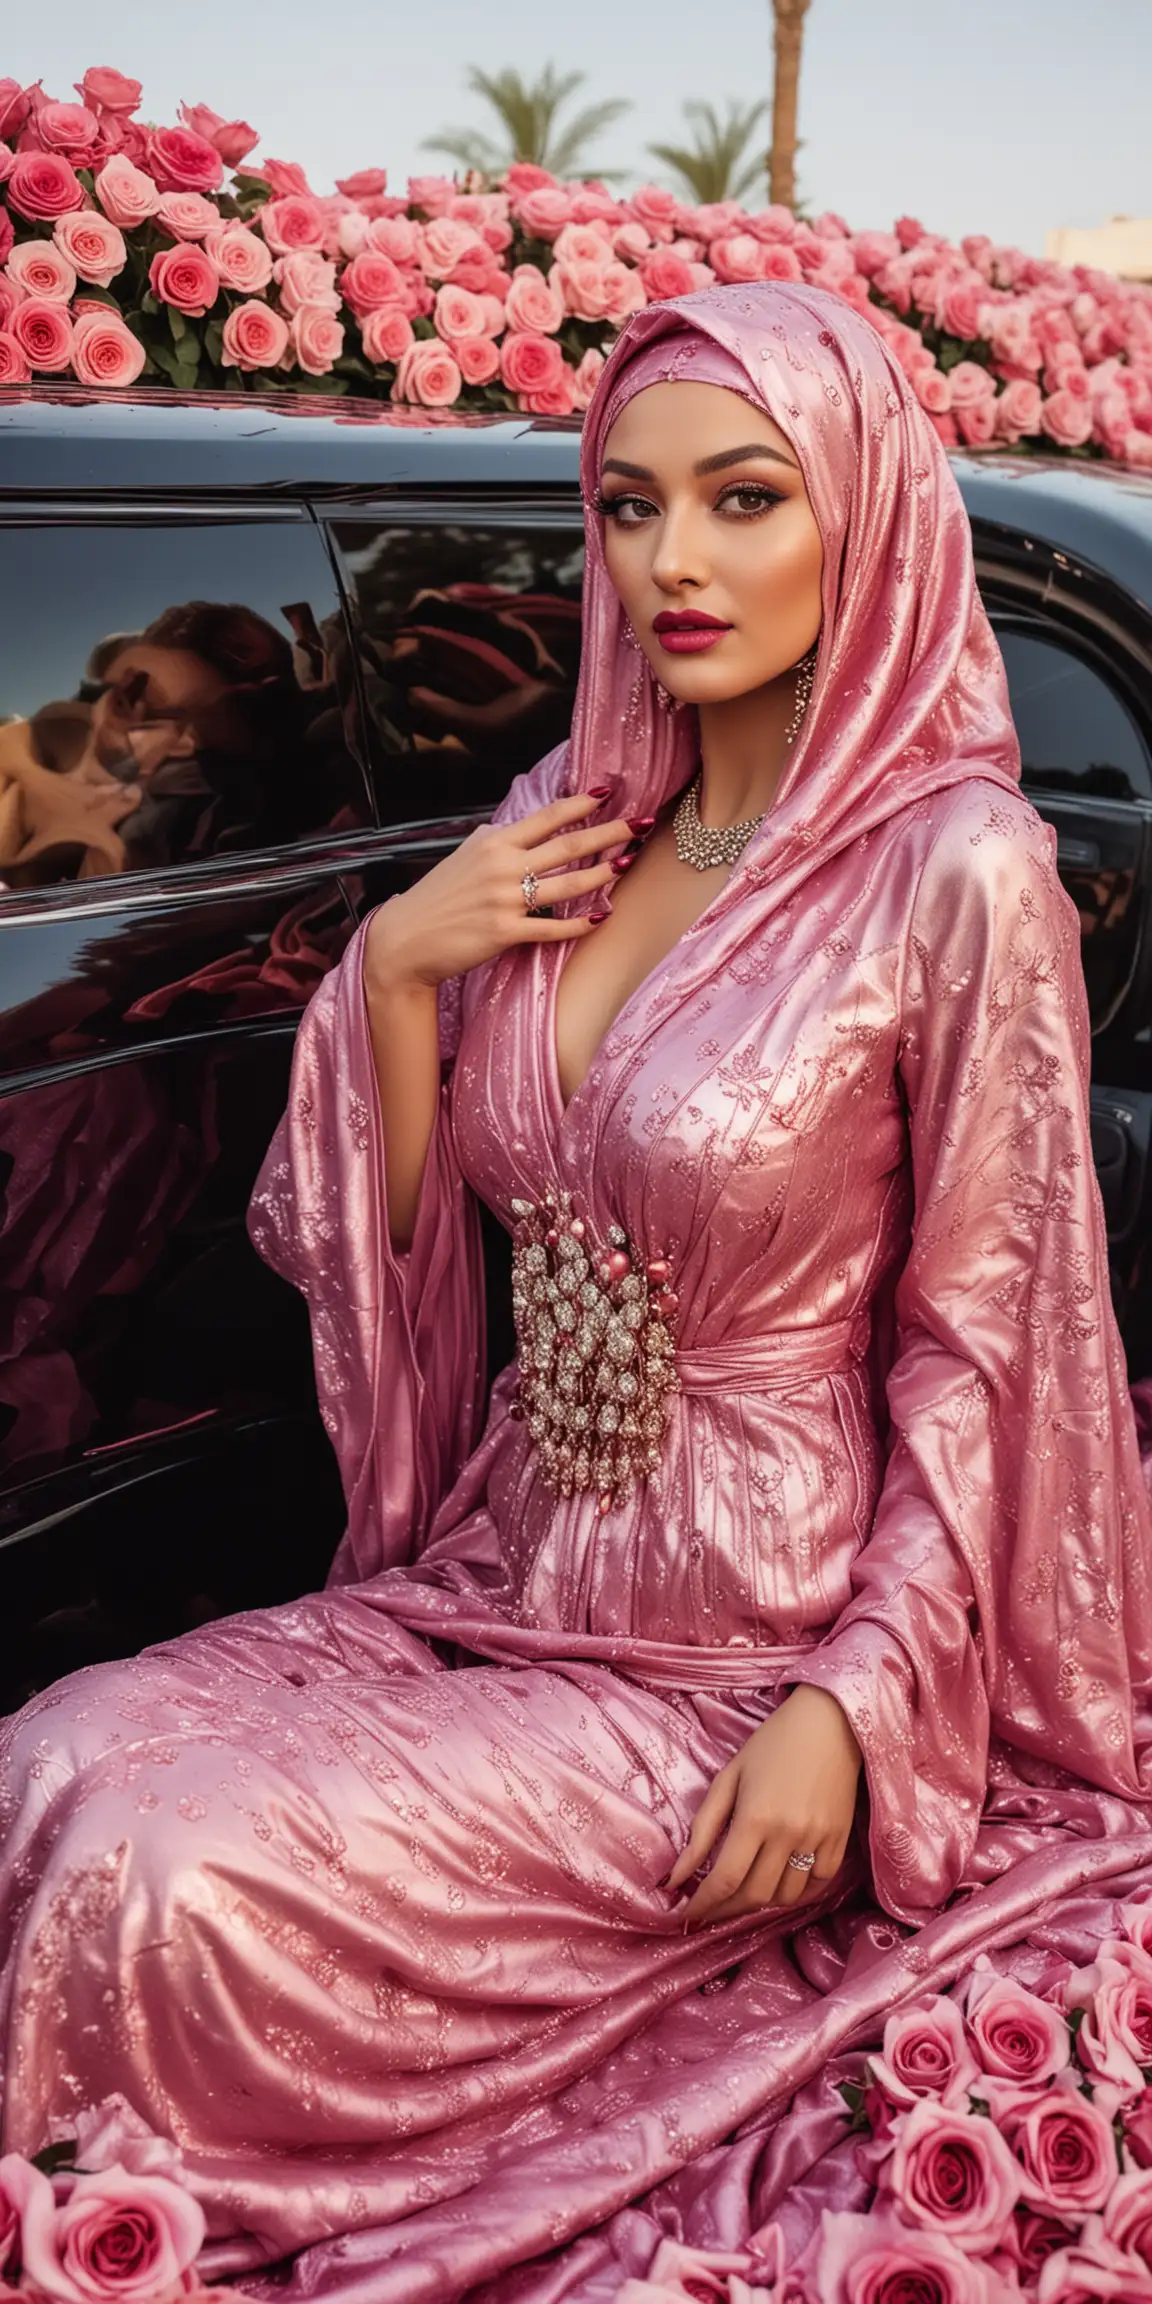 Newlywed Arab Muslimah in Magenta Abaya Posing with Roses in Luxury Limo